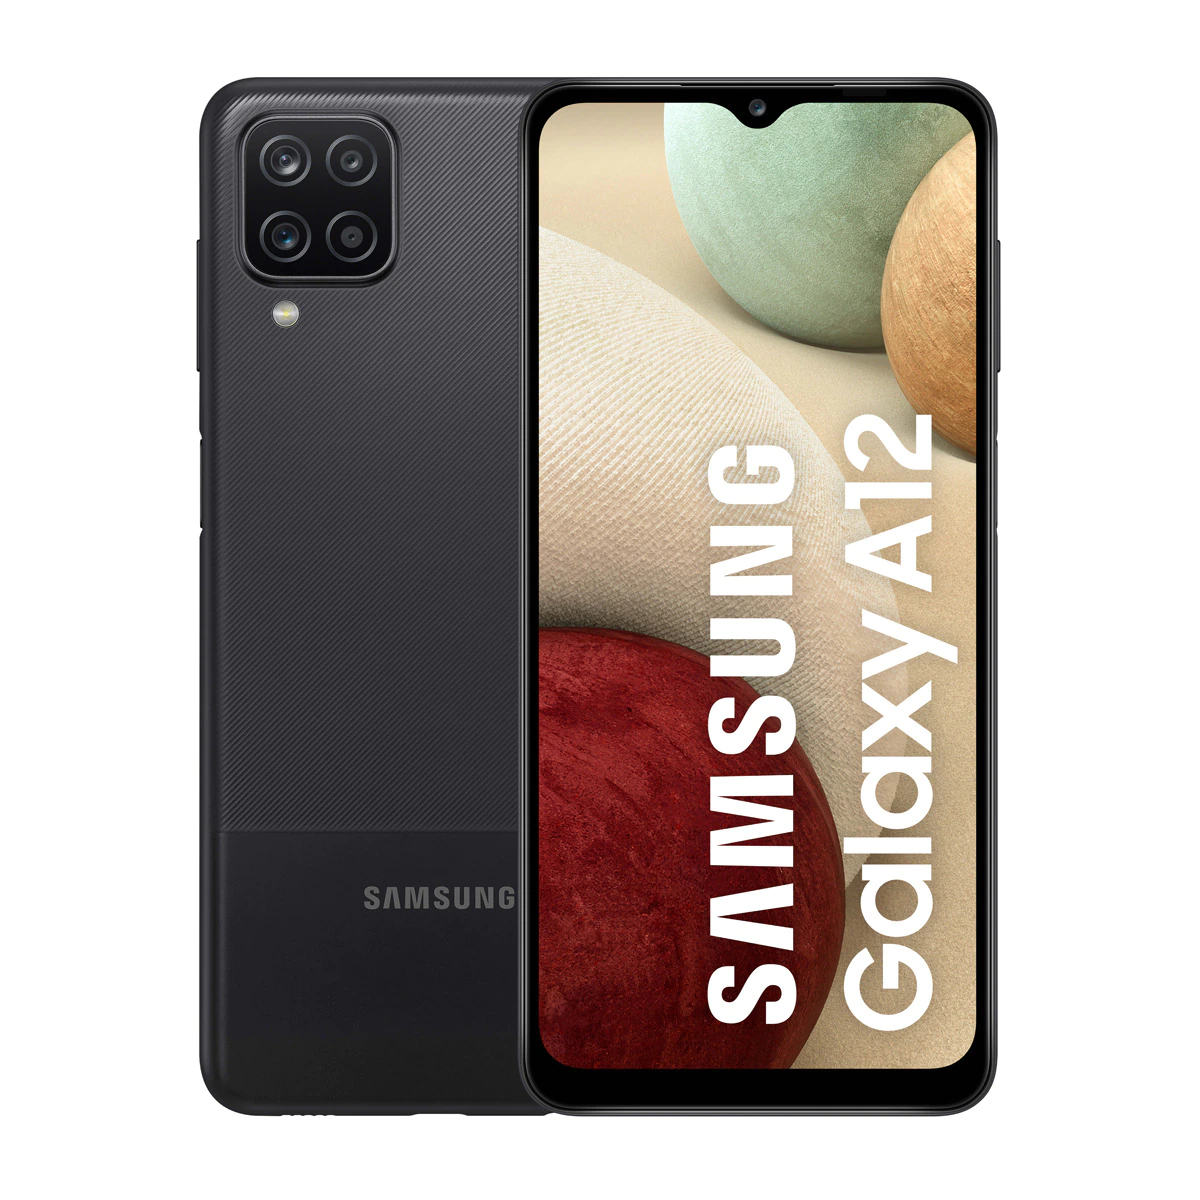 Samsung Galaxy A12 3 GB + 32 GB negro móvil libre